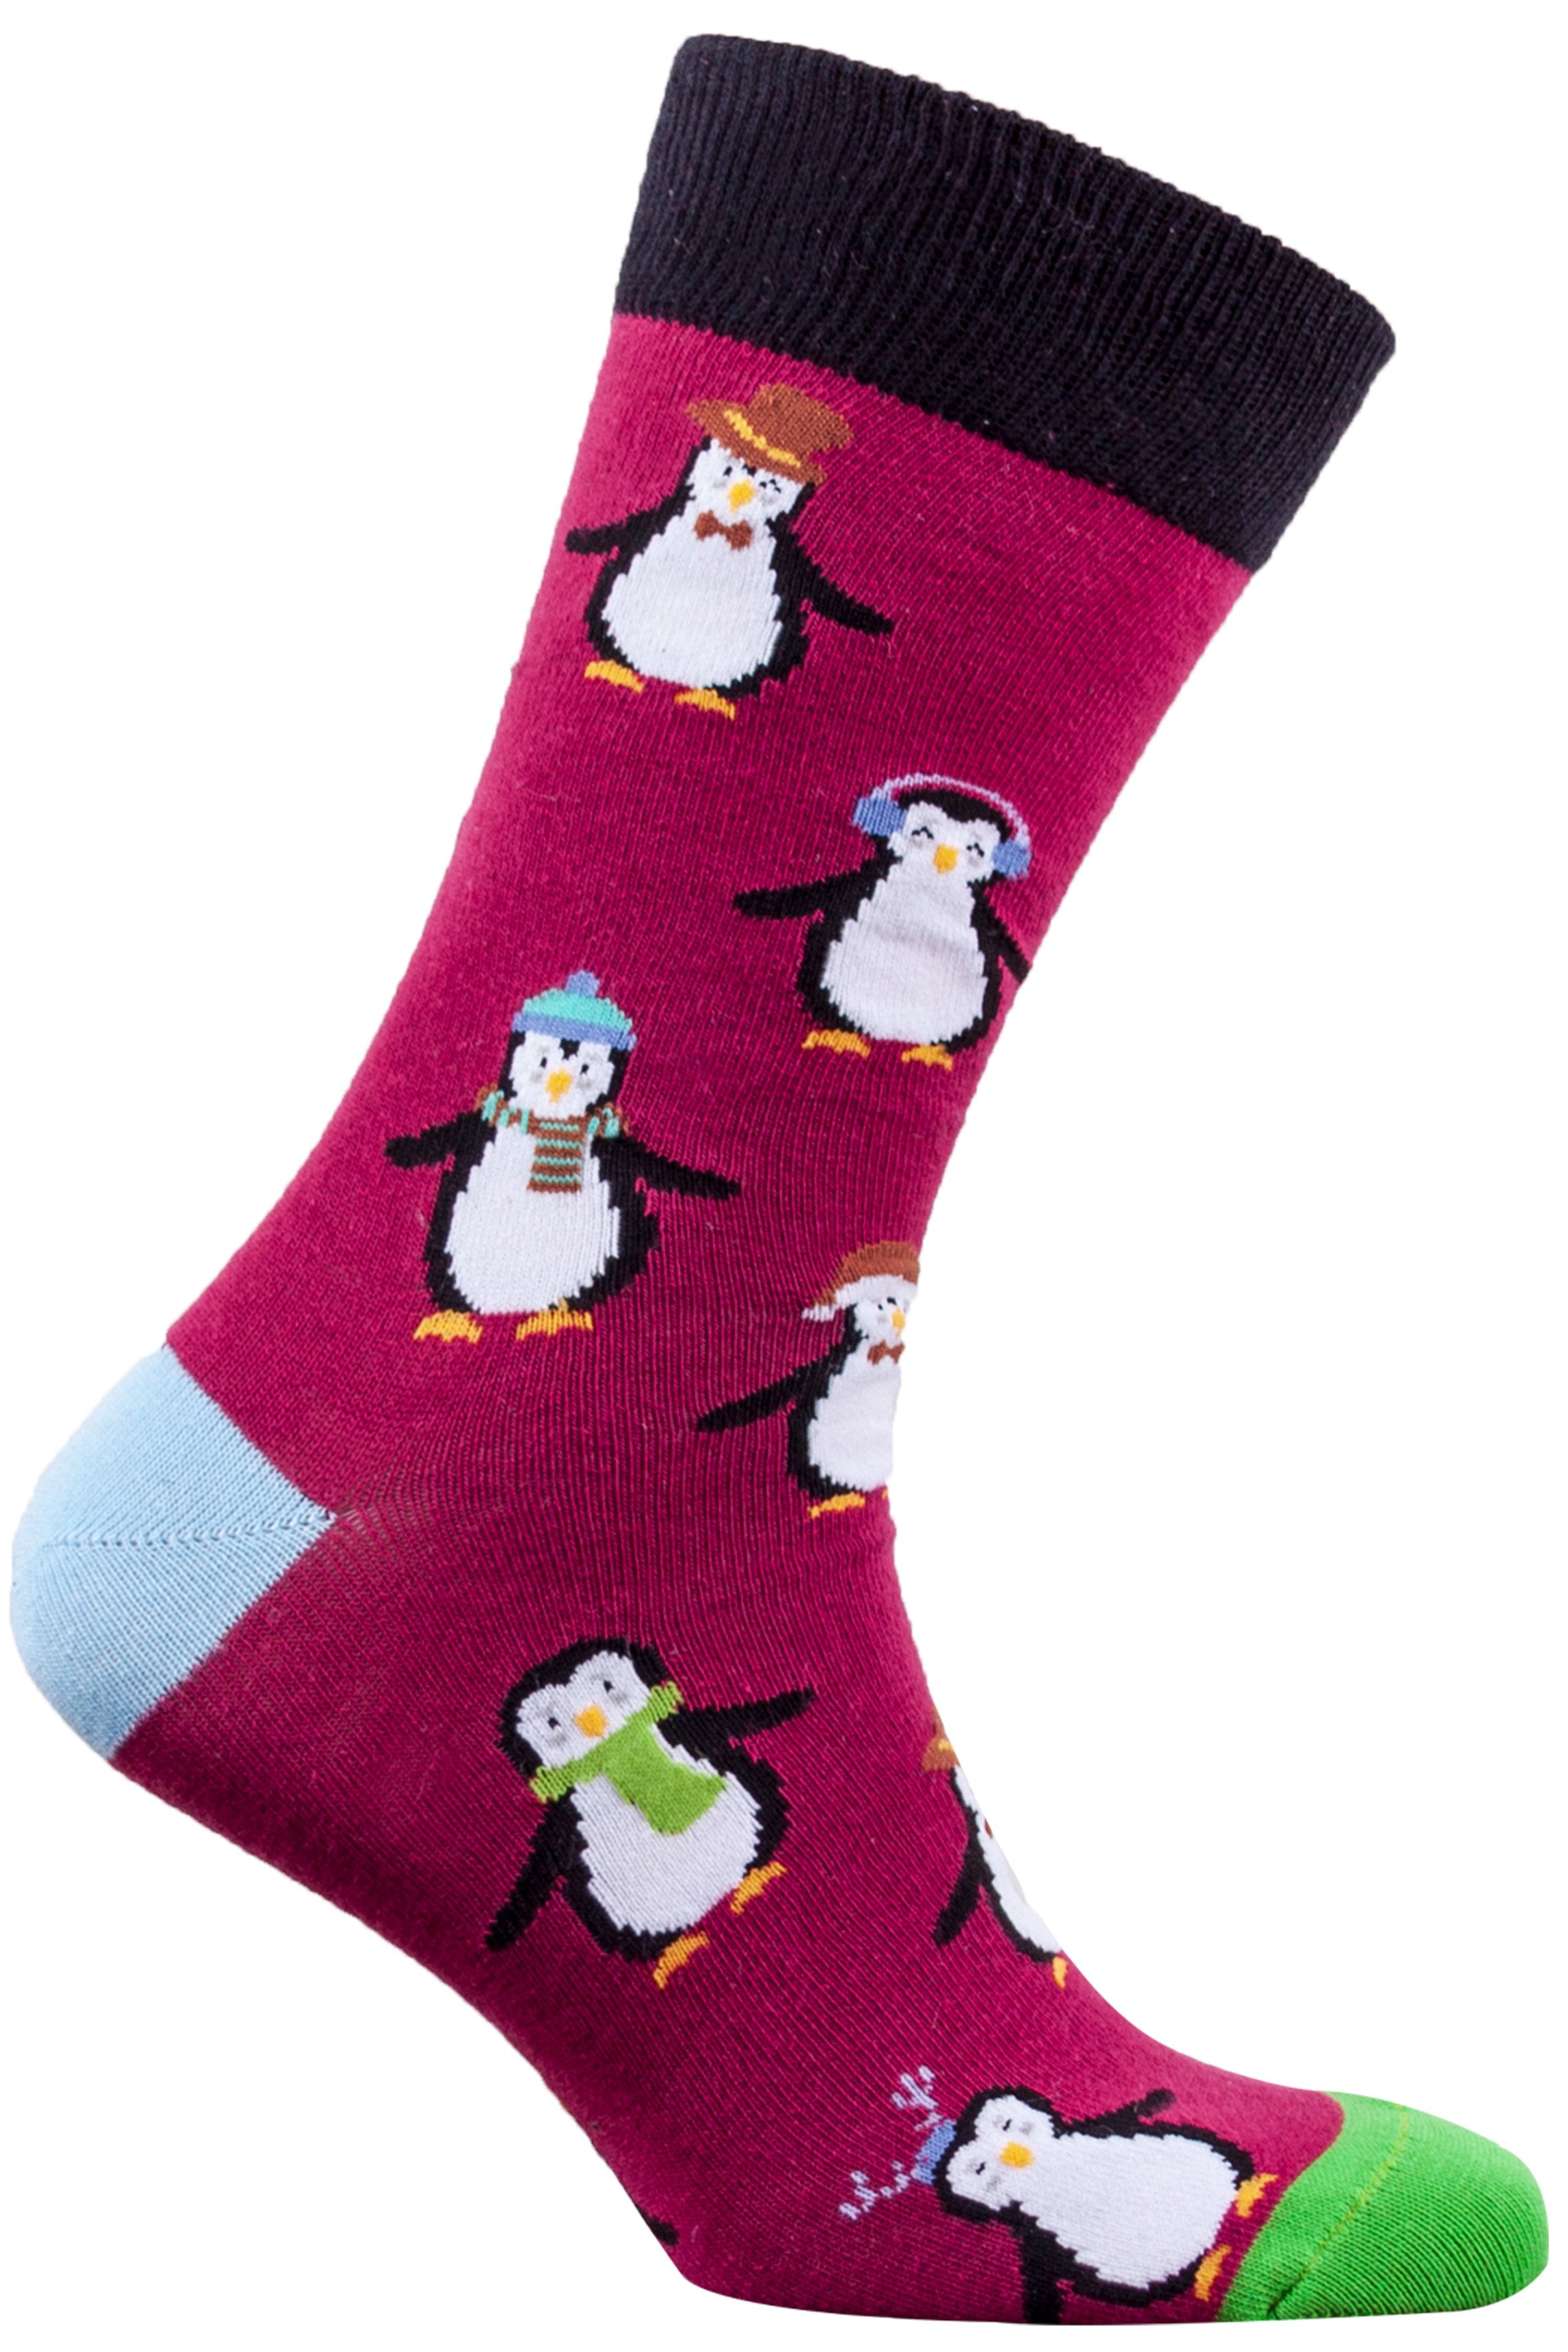 Penguin Socks - Walmart.com